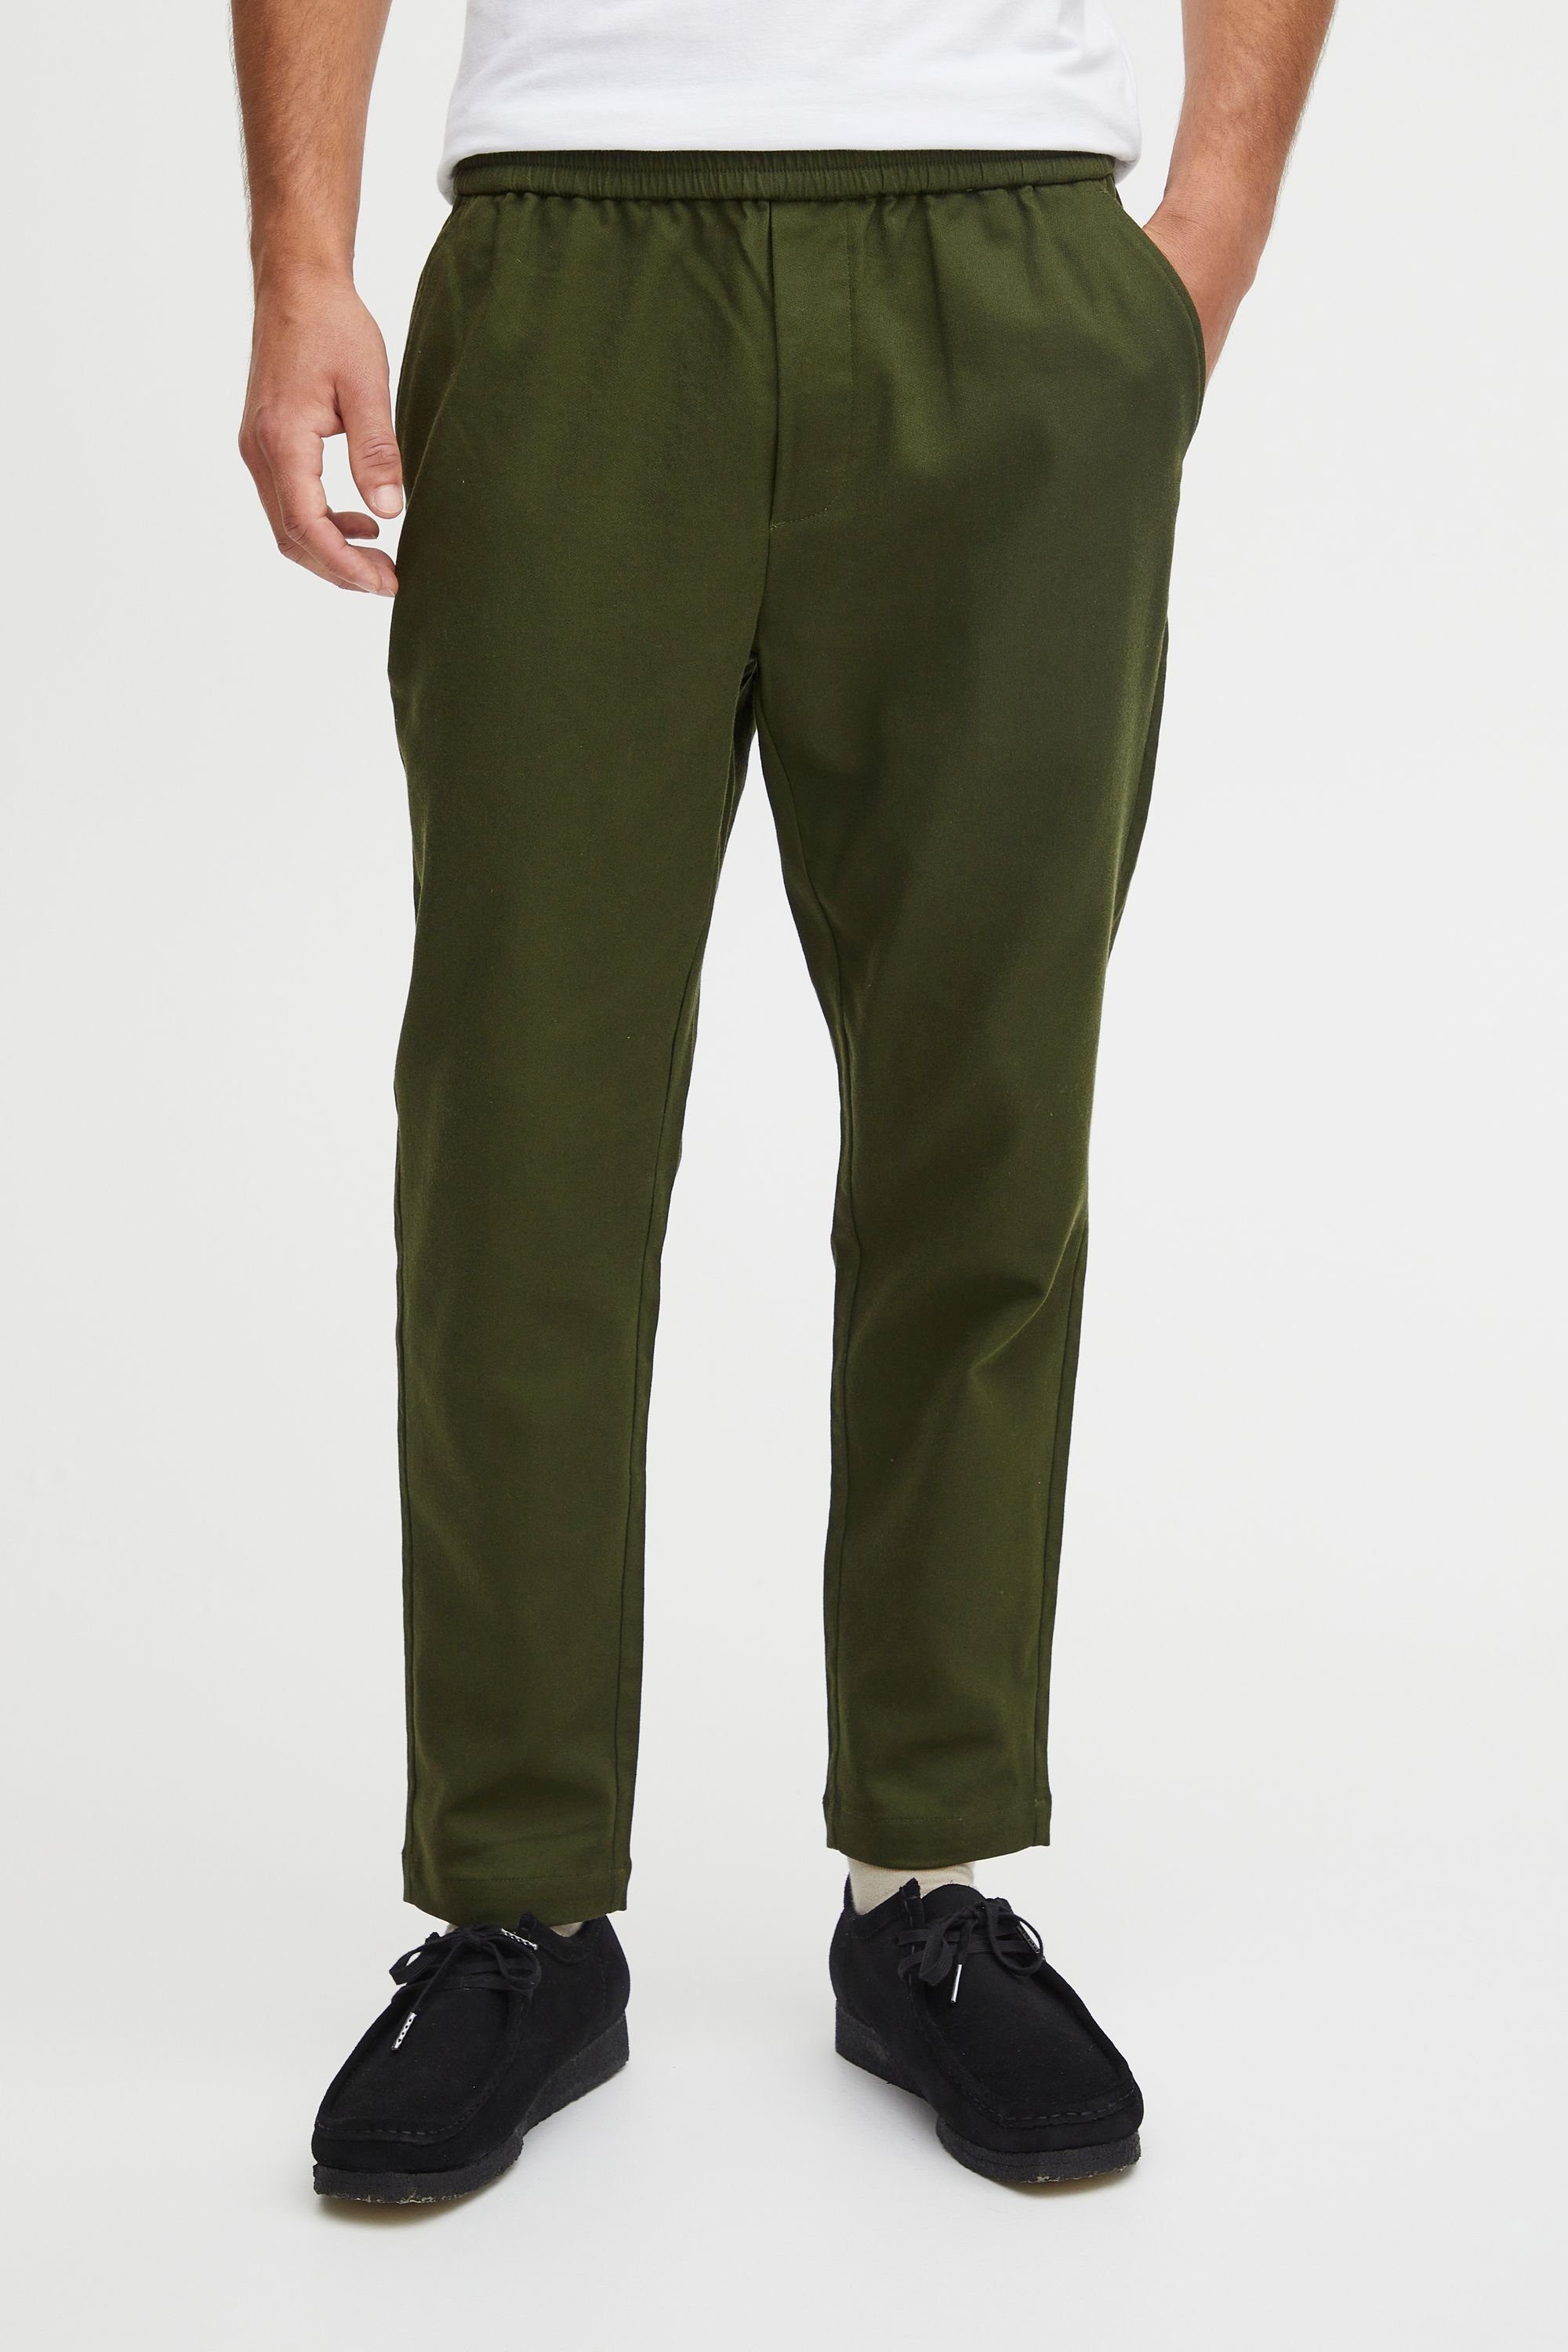 Green Friday pants jersey CFGus - Rifle Casual 20504819 0091 (190419) Stoffhose